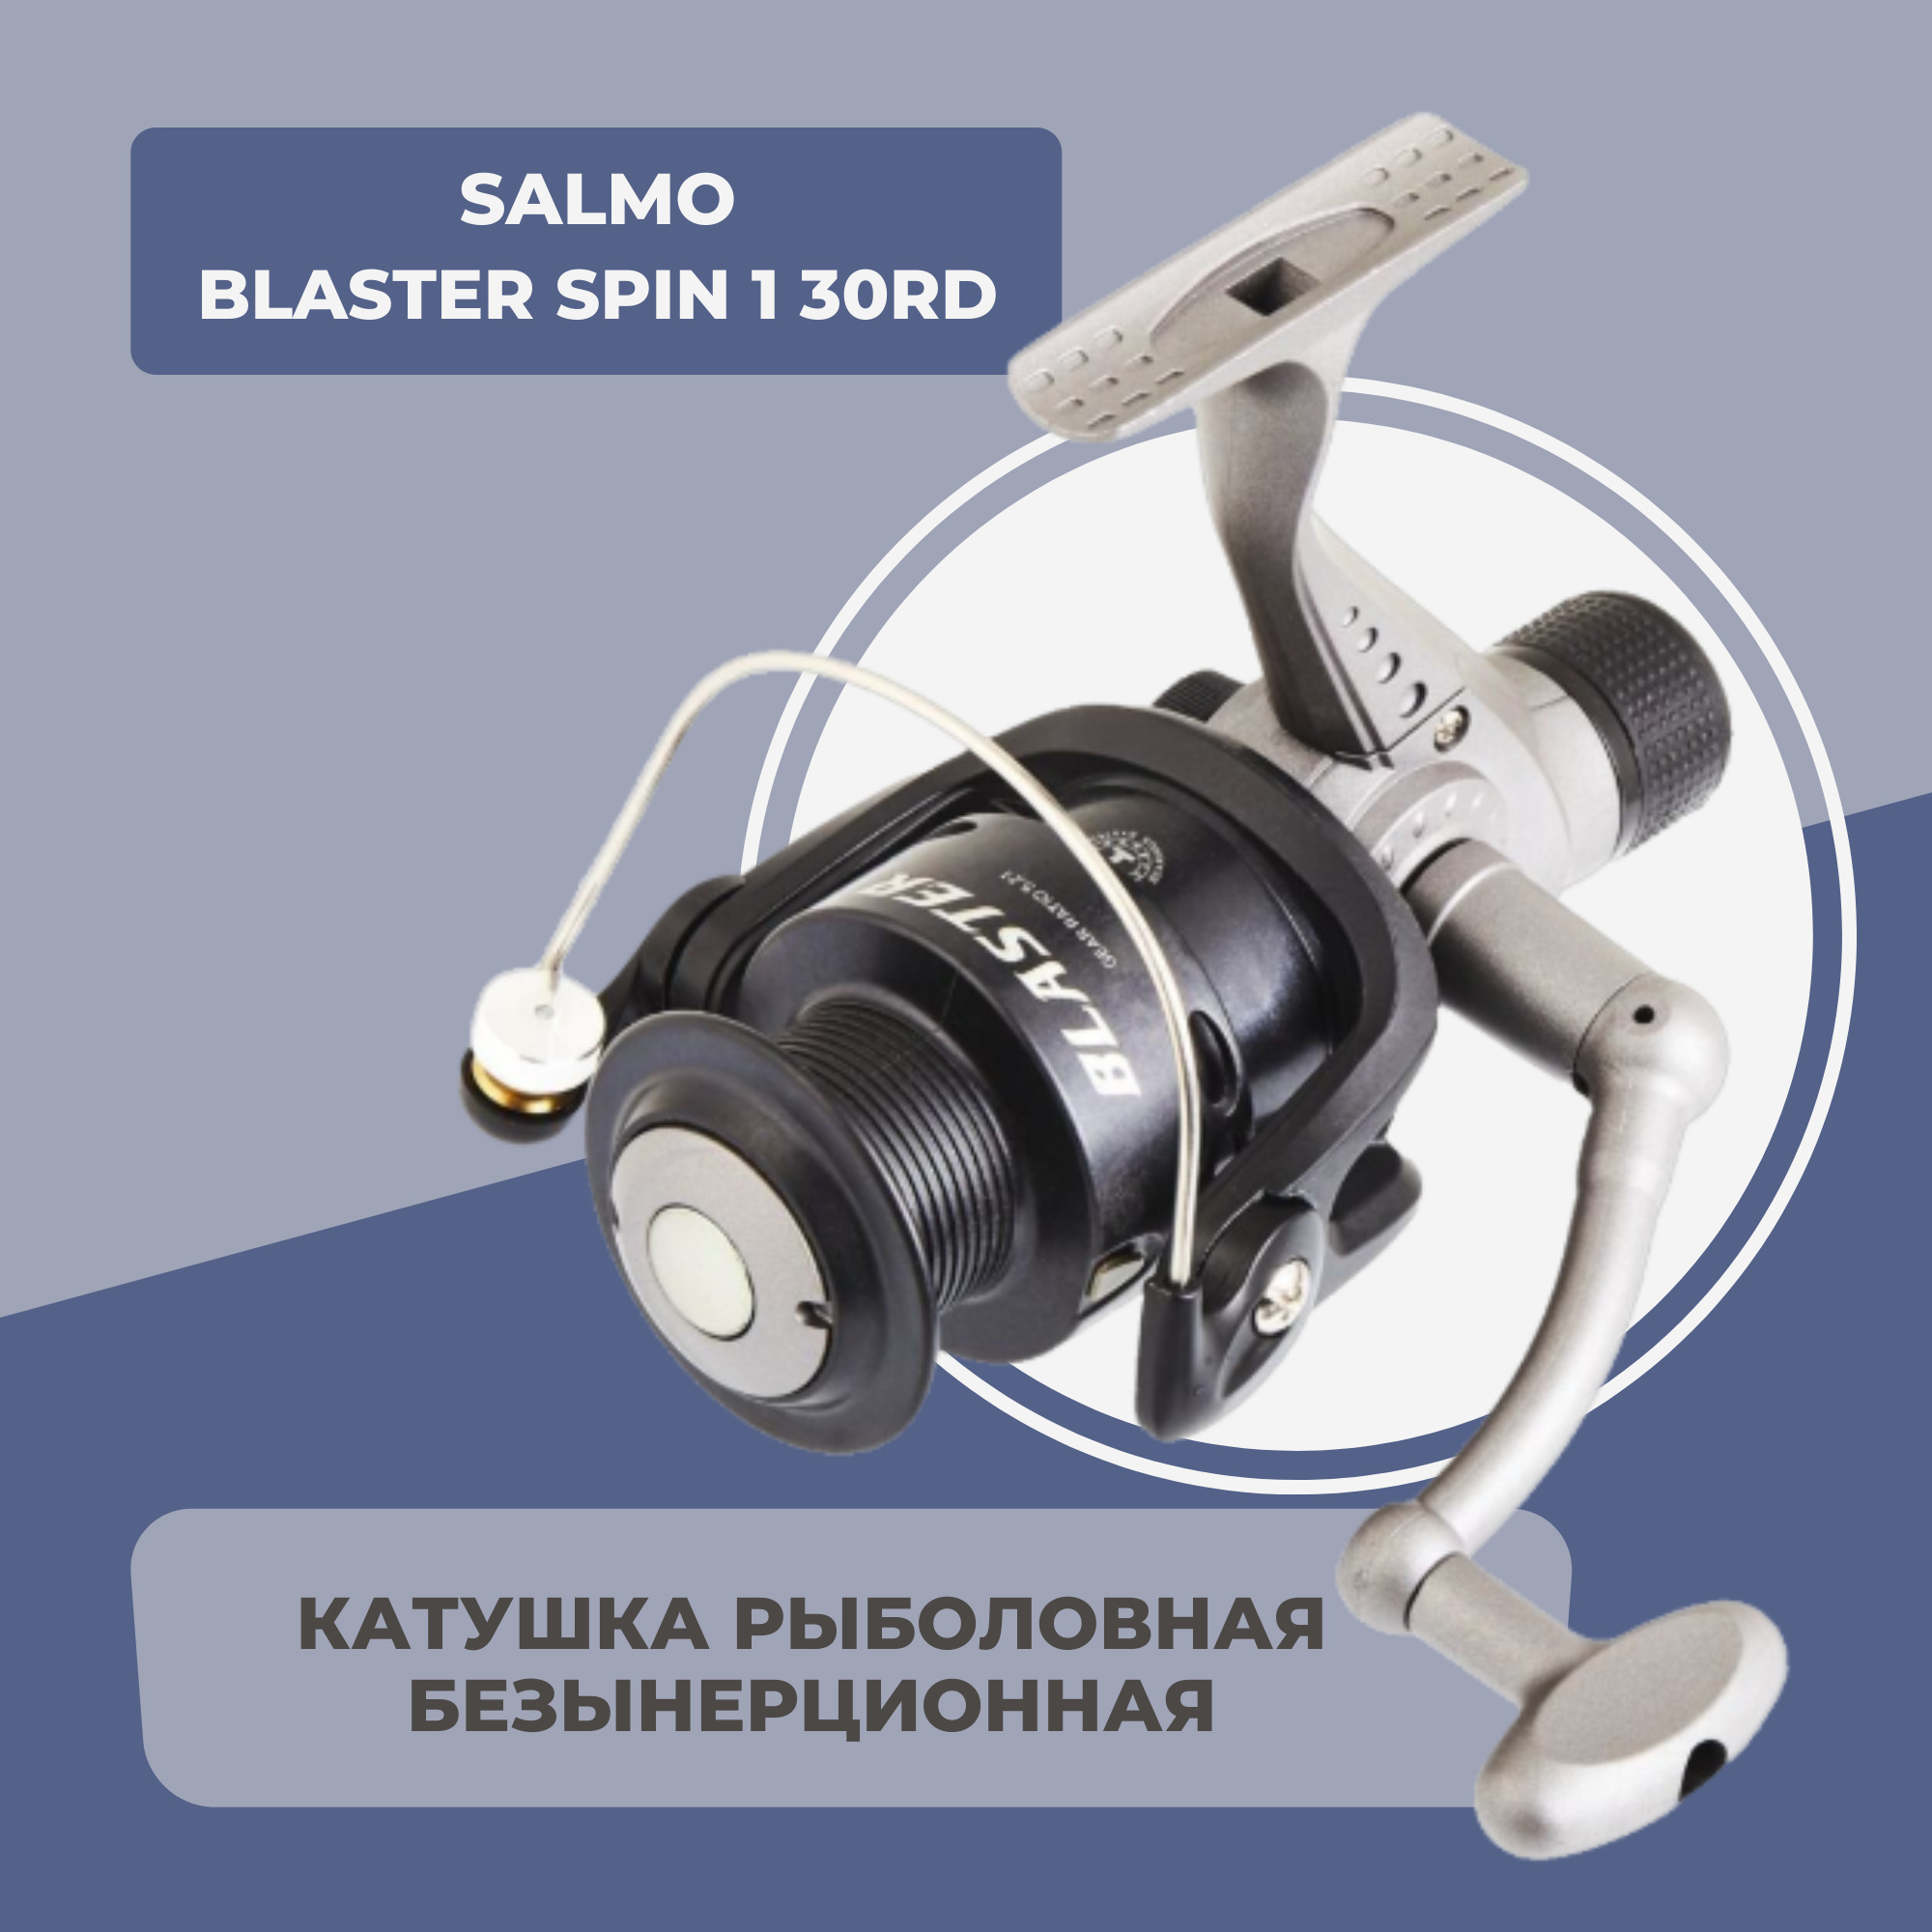 Spin 40. Salmo Blaster Feeder катушка. Salmo Blaster Spin 40. Катушка для спиннинга Salmo. Spin 30 Blaster спиннинг.